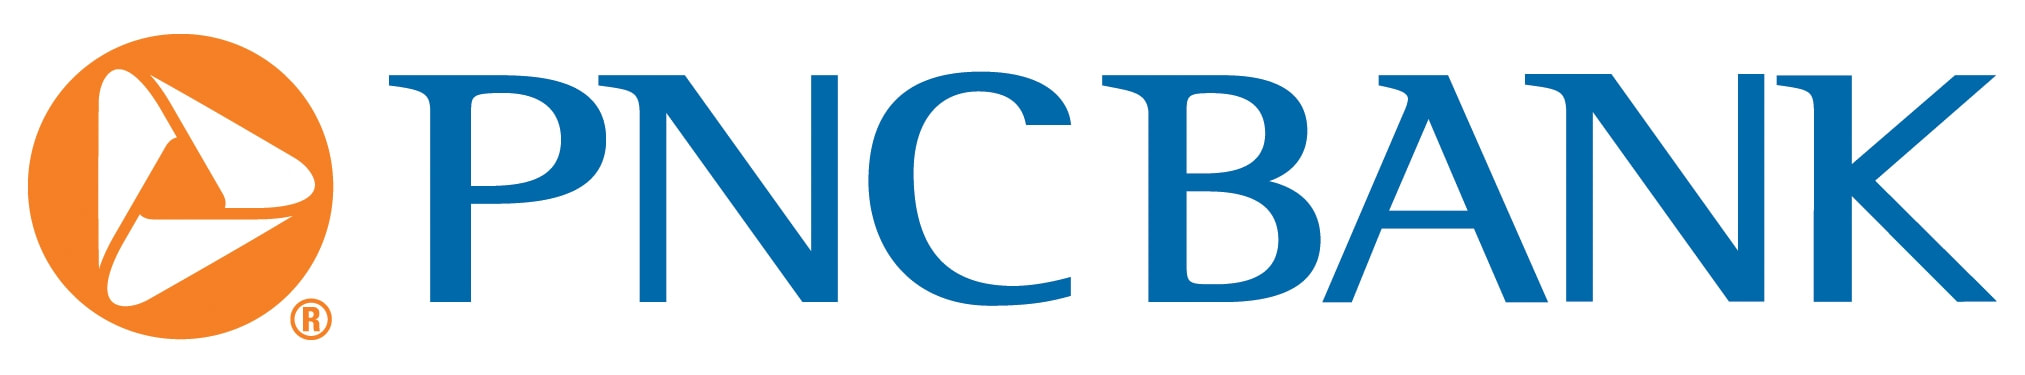 pnc-bank-logo_1_orig.jpg